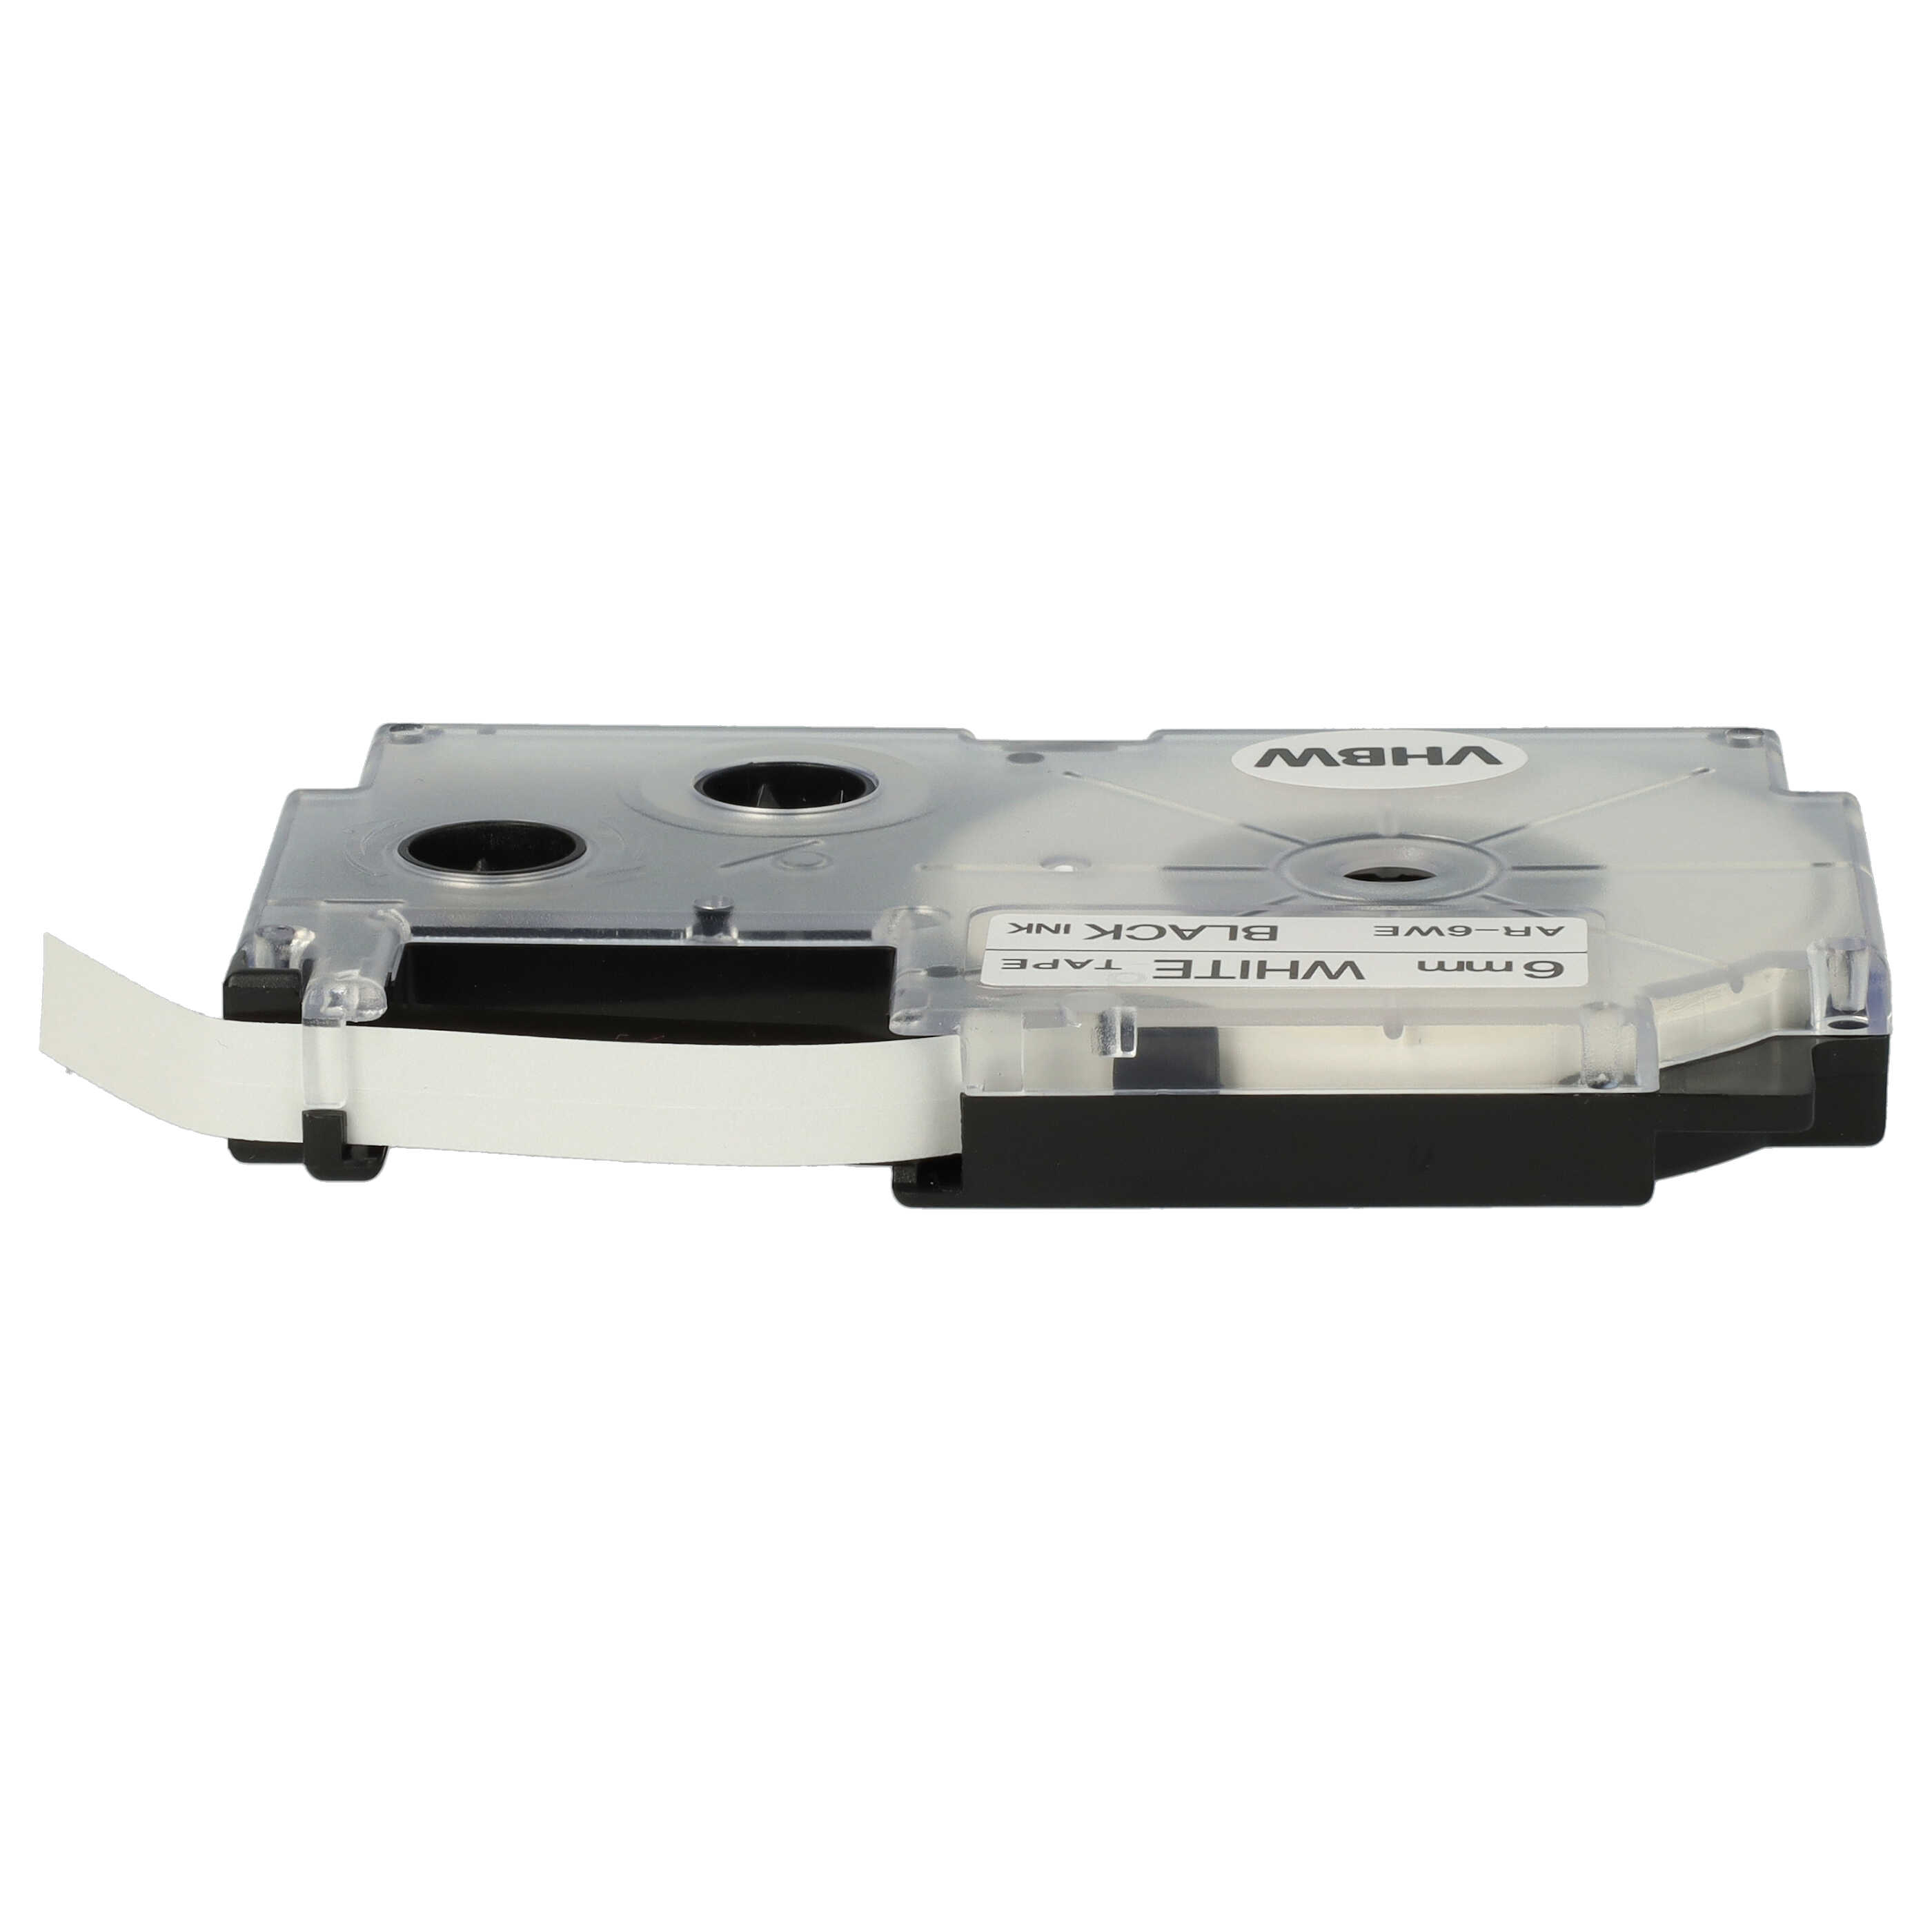 10x Cassetta nastro sostituisce Casio XR-6WE1, XR-6WE per etichettatrice Casio 6mm nero su bianco